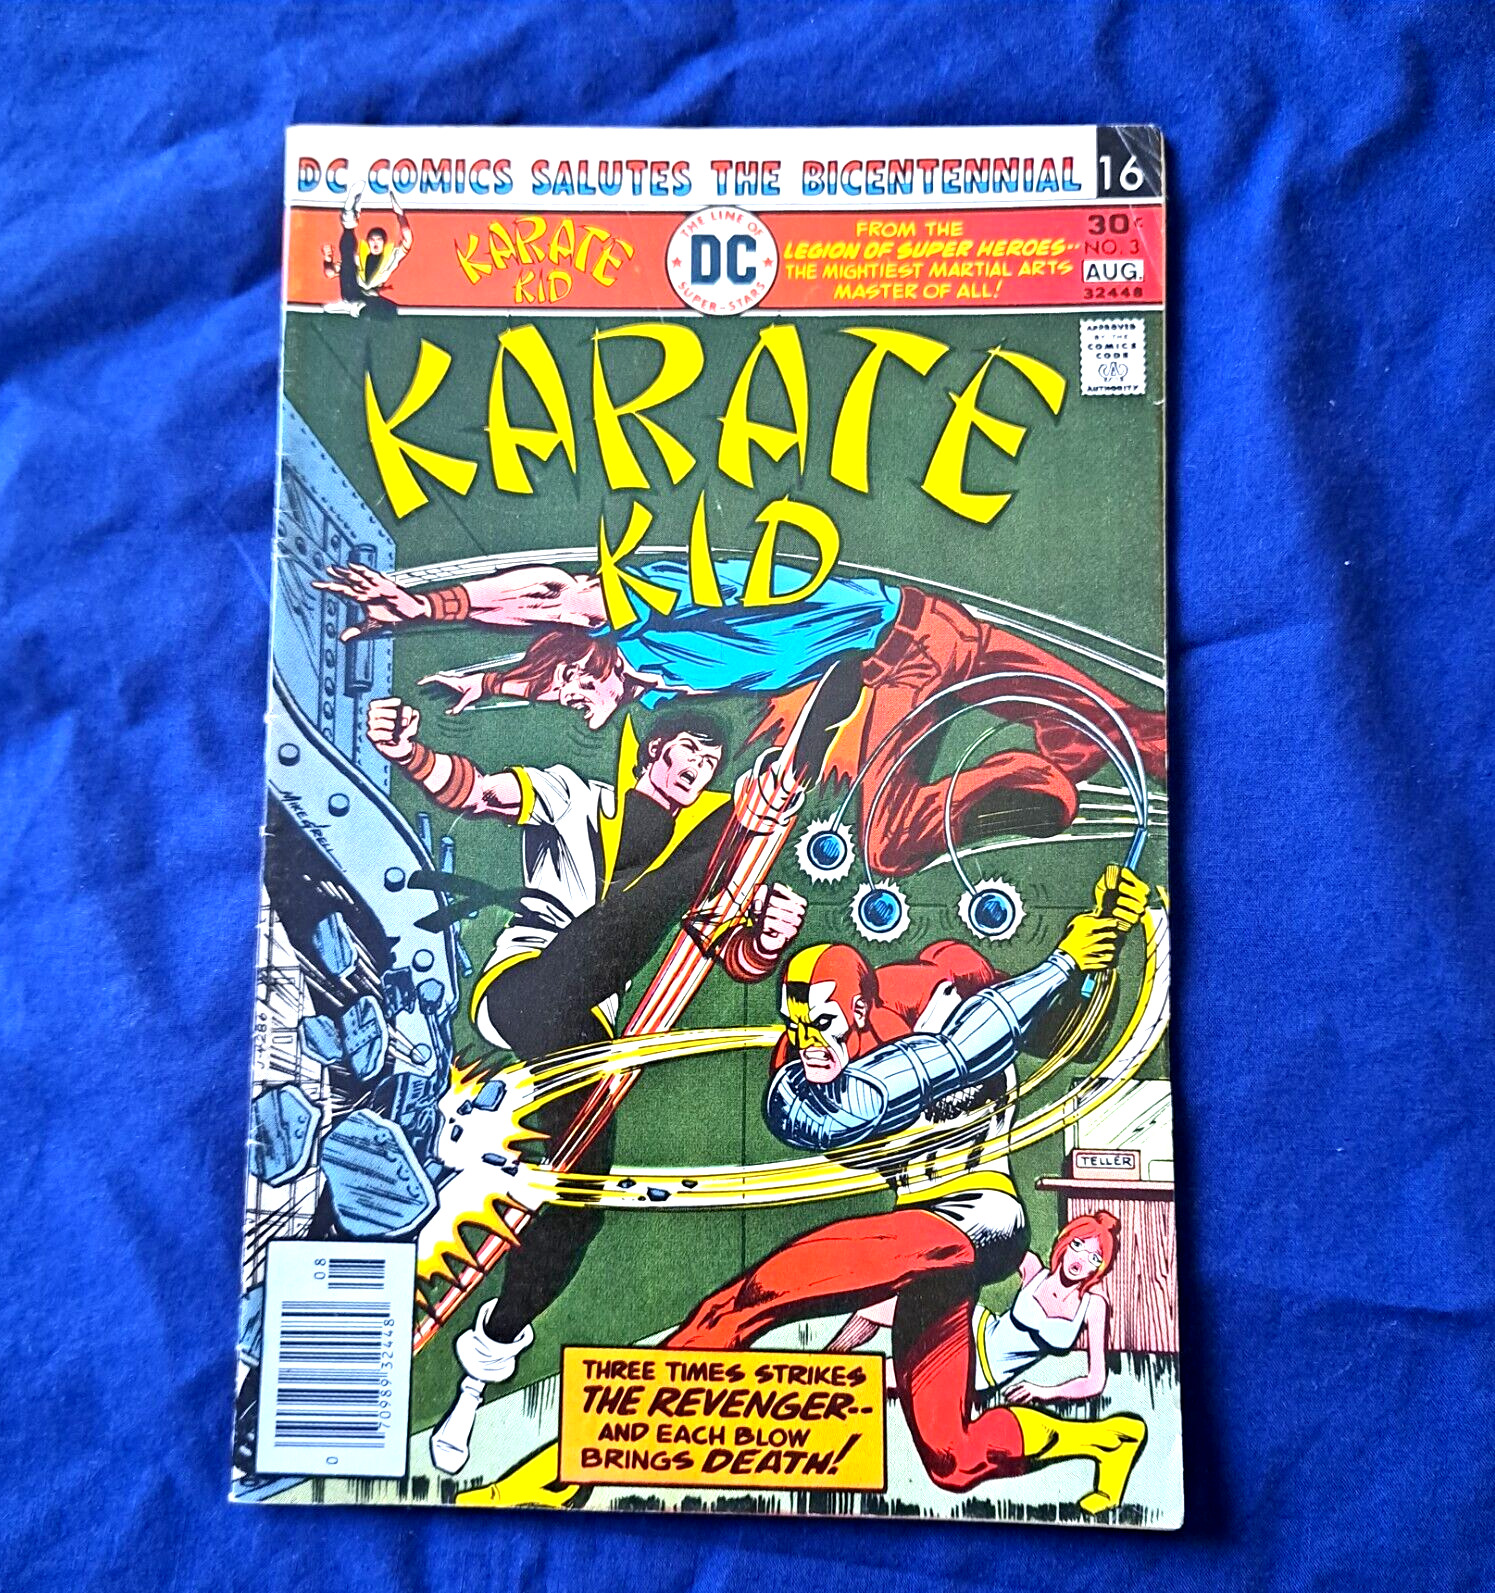 Karate Kid Comic Book #3, DC Comics, 1976 (Bronze Age), Bicentennial Issue